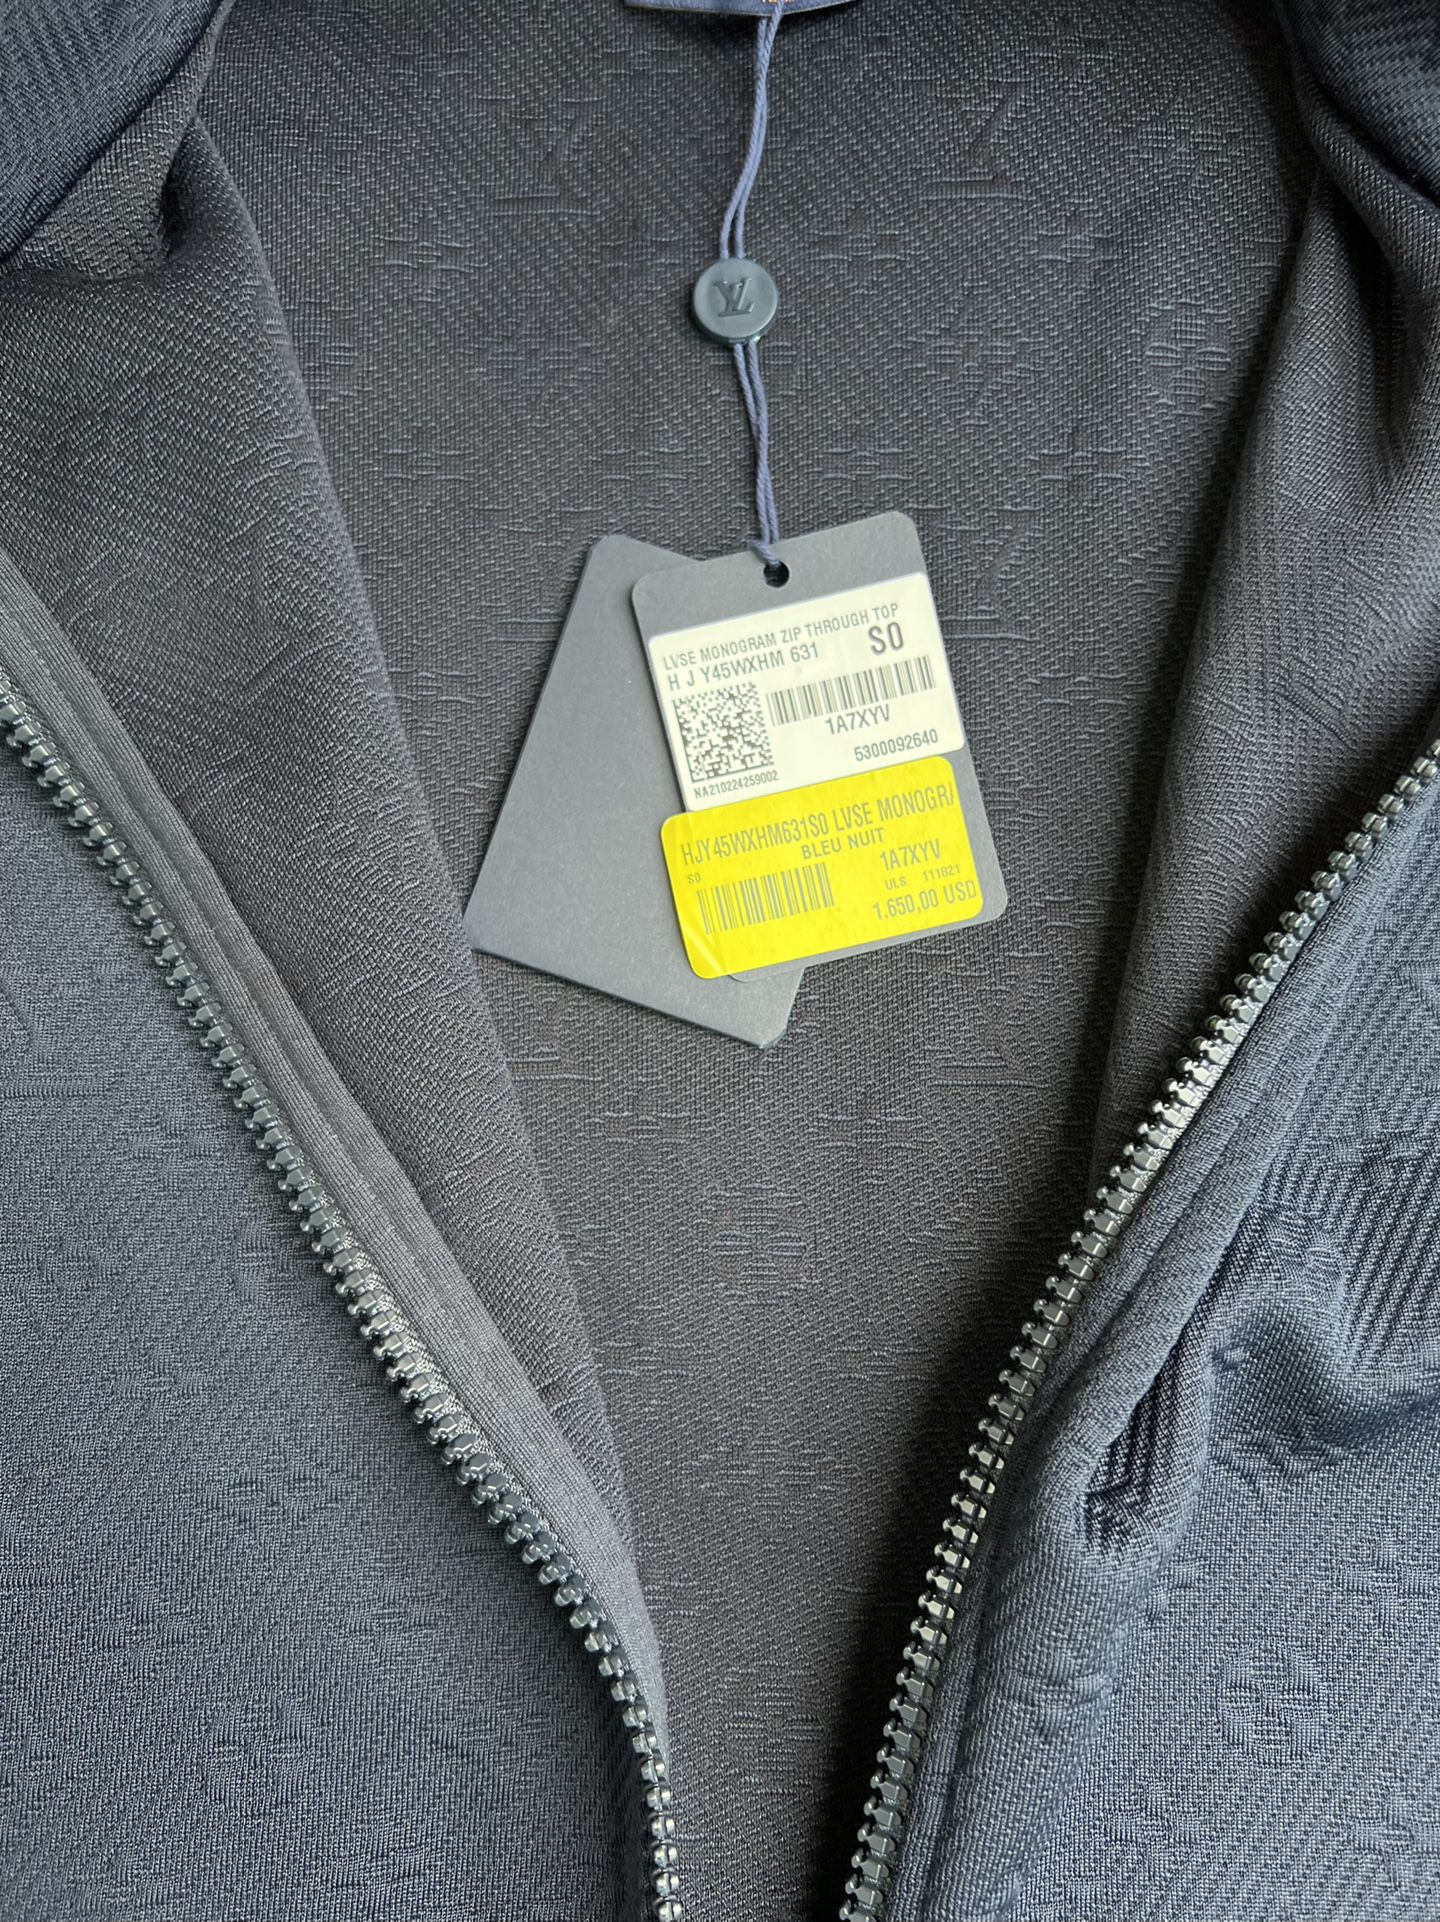 Louis Vuitton LVSE Monogram fleece Tracksuit for Sale in East